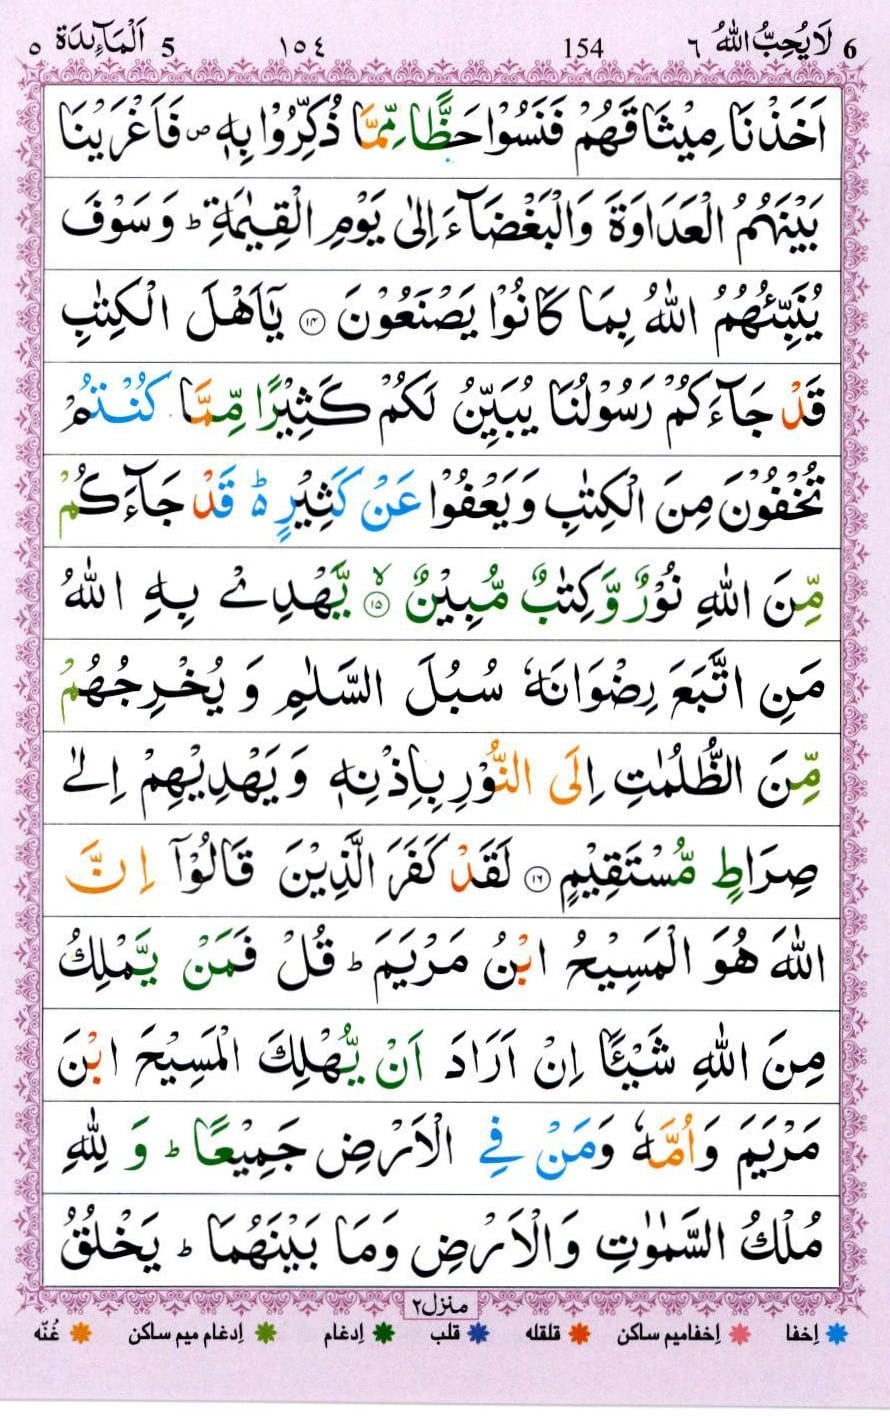 Surah Al Maidah translation in urdu